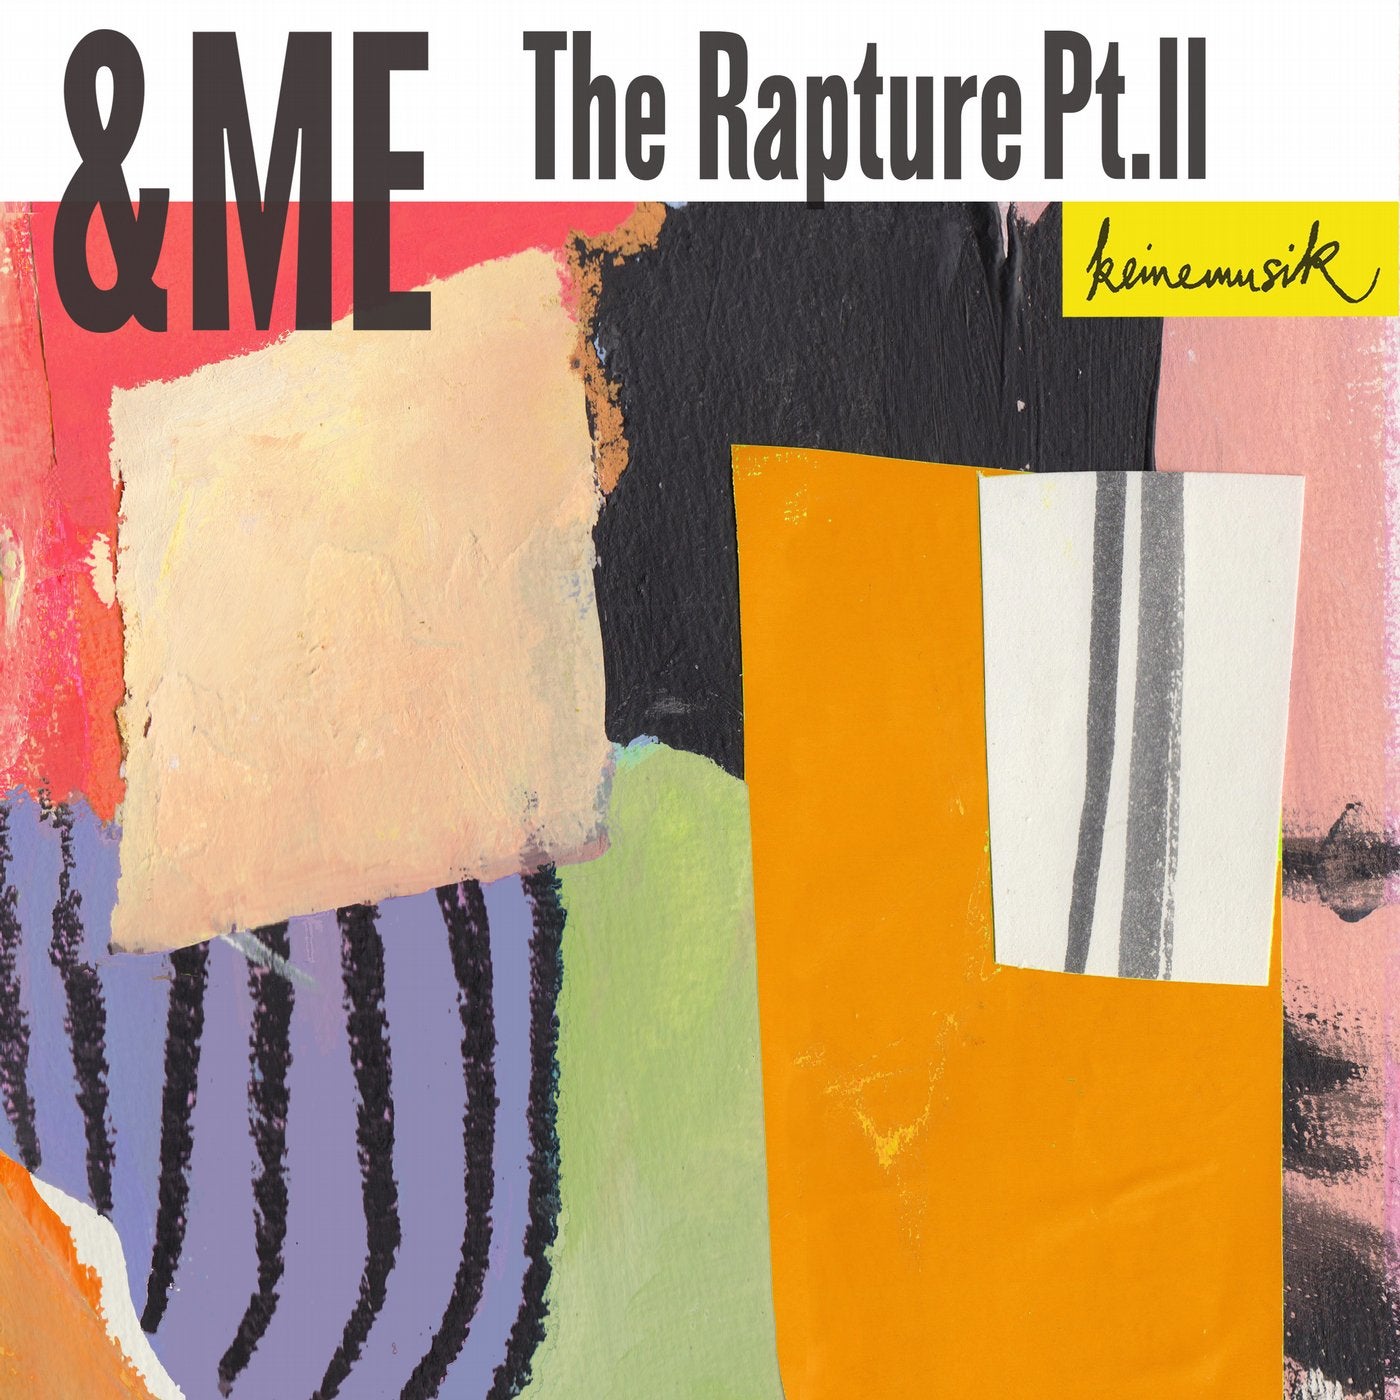 The rapture pt iii. Me the Rapture pt.II. Keinemusik. &Me Keinemusik. Keinemusik Covers.